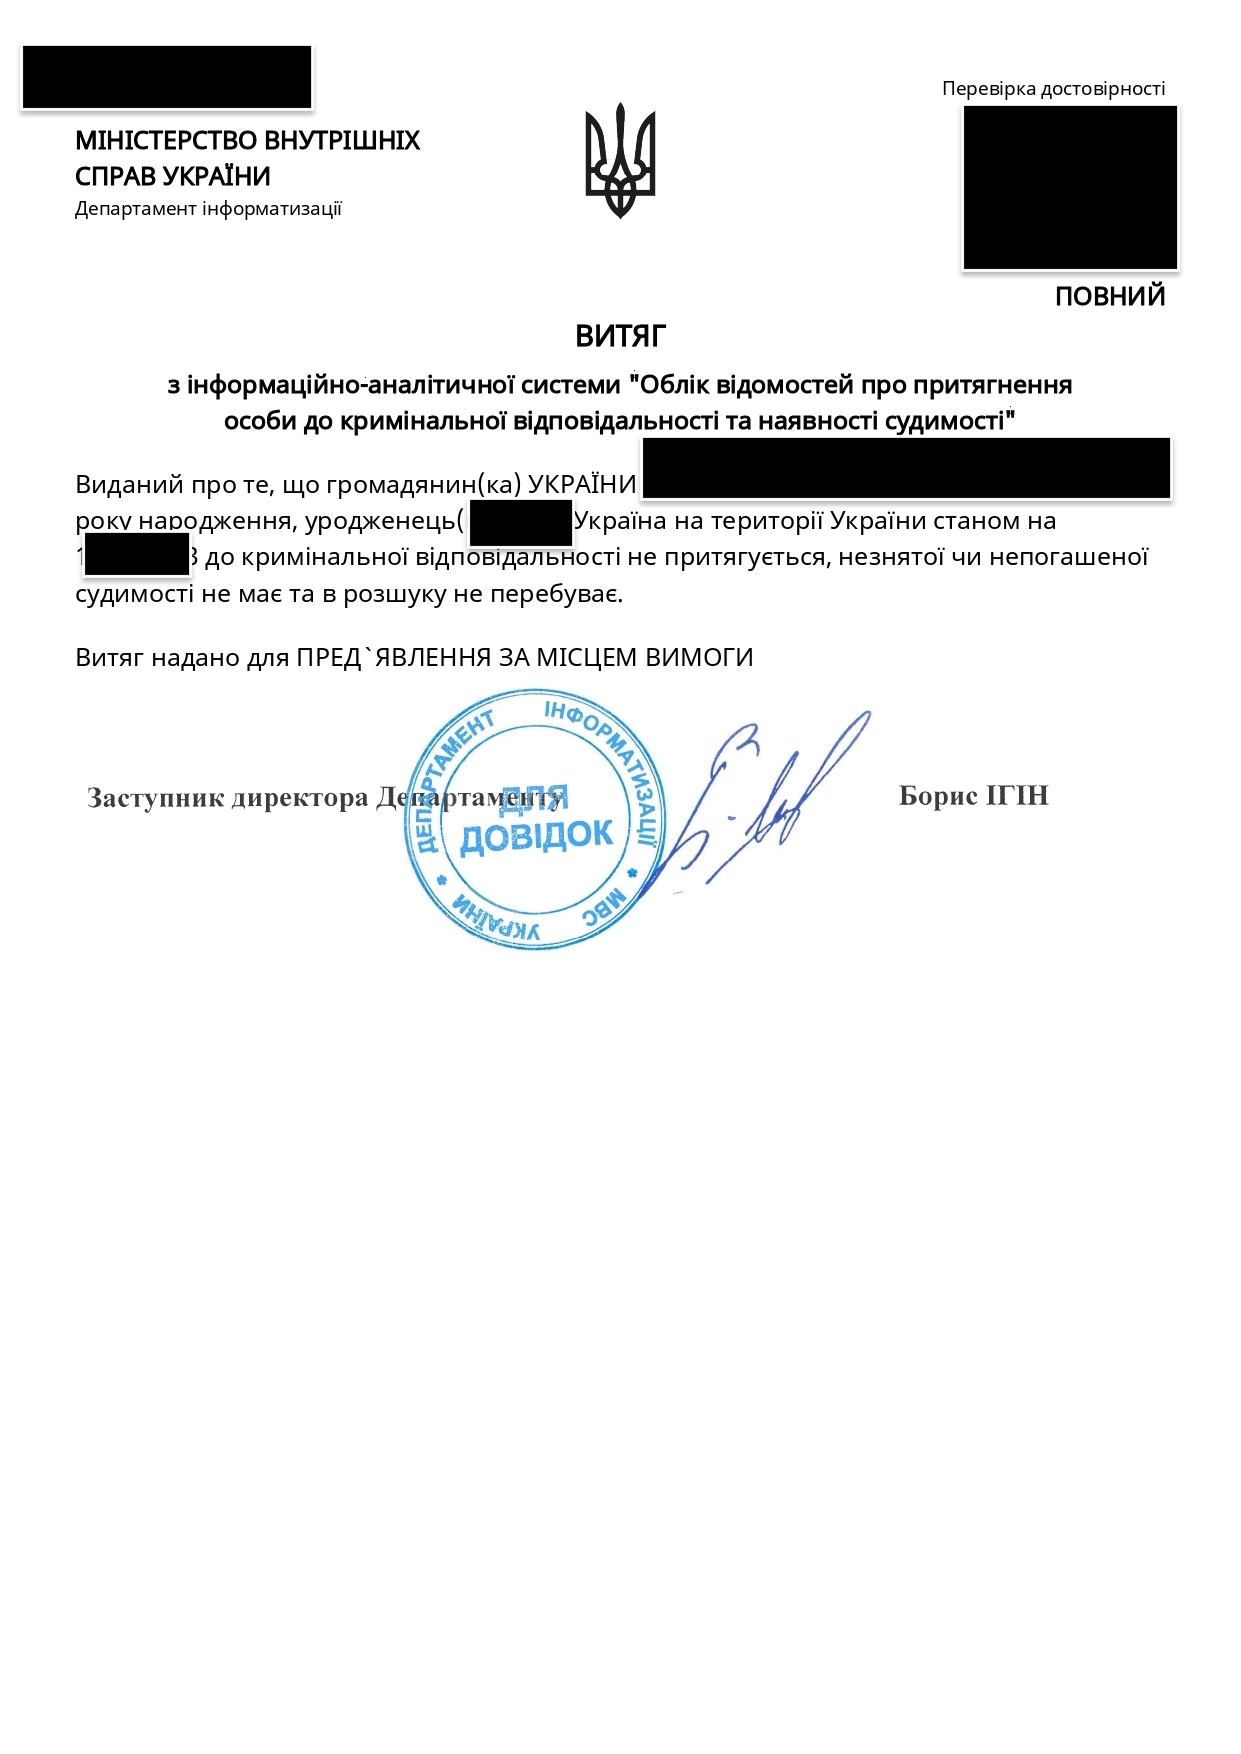 Certified Translation of Ukrainian Criminal Record from Ukrainian to English